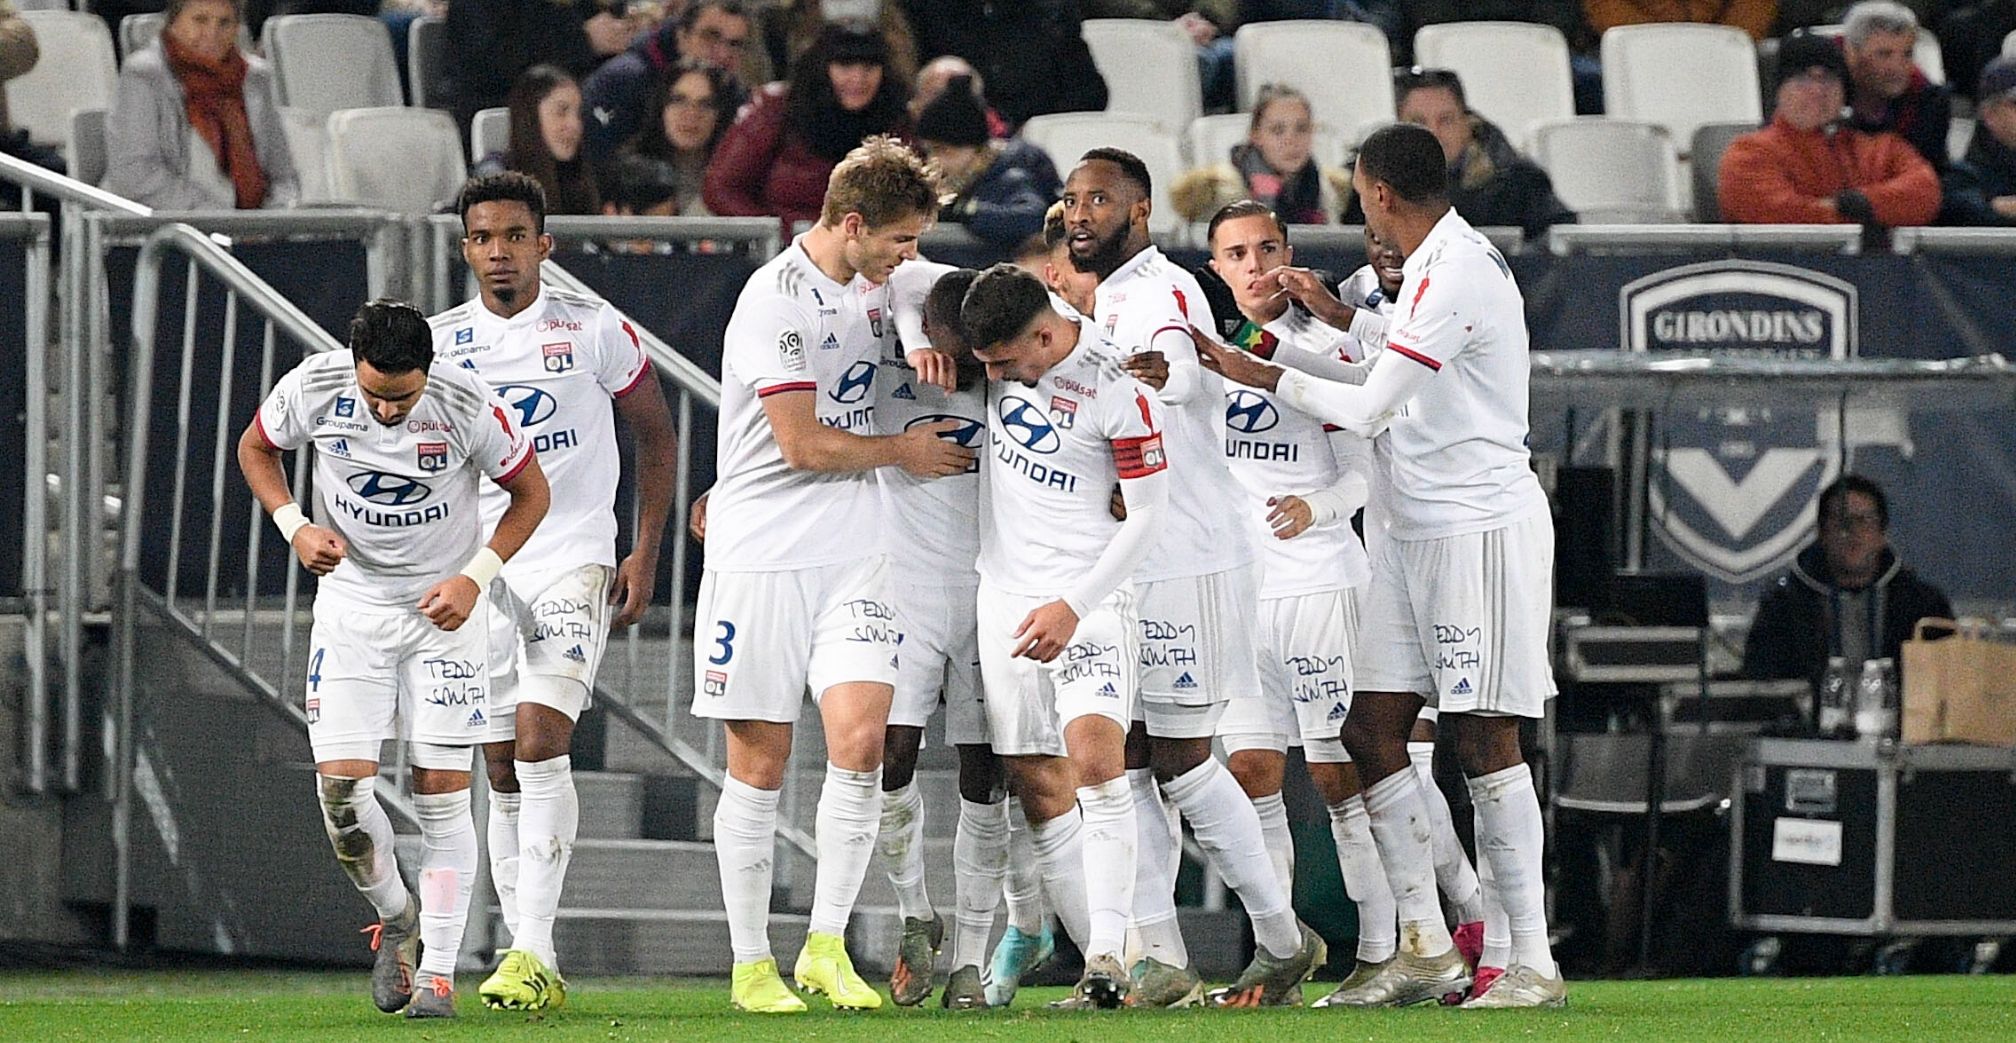 Moussa Dembélé scored the winner (his 11th of the season) as Lyon beat Bordeuax 2-1